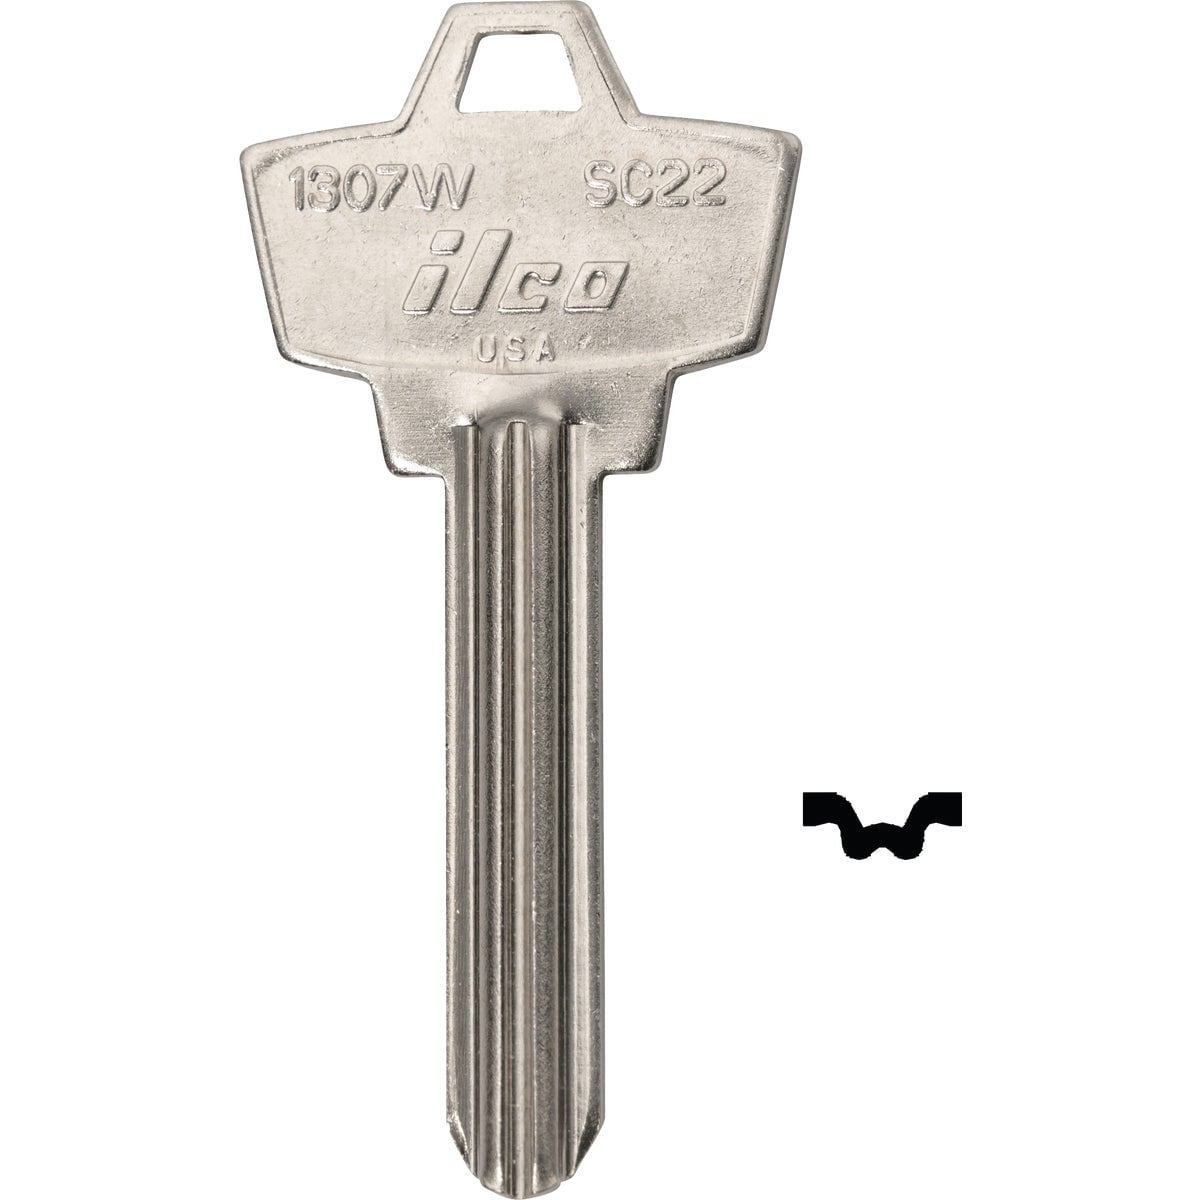 KanuLock Spare Keys 22